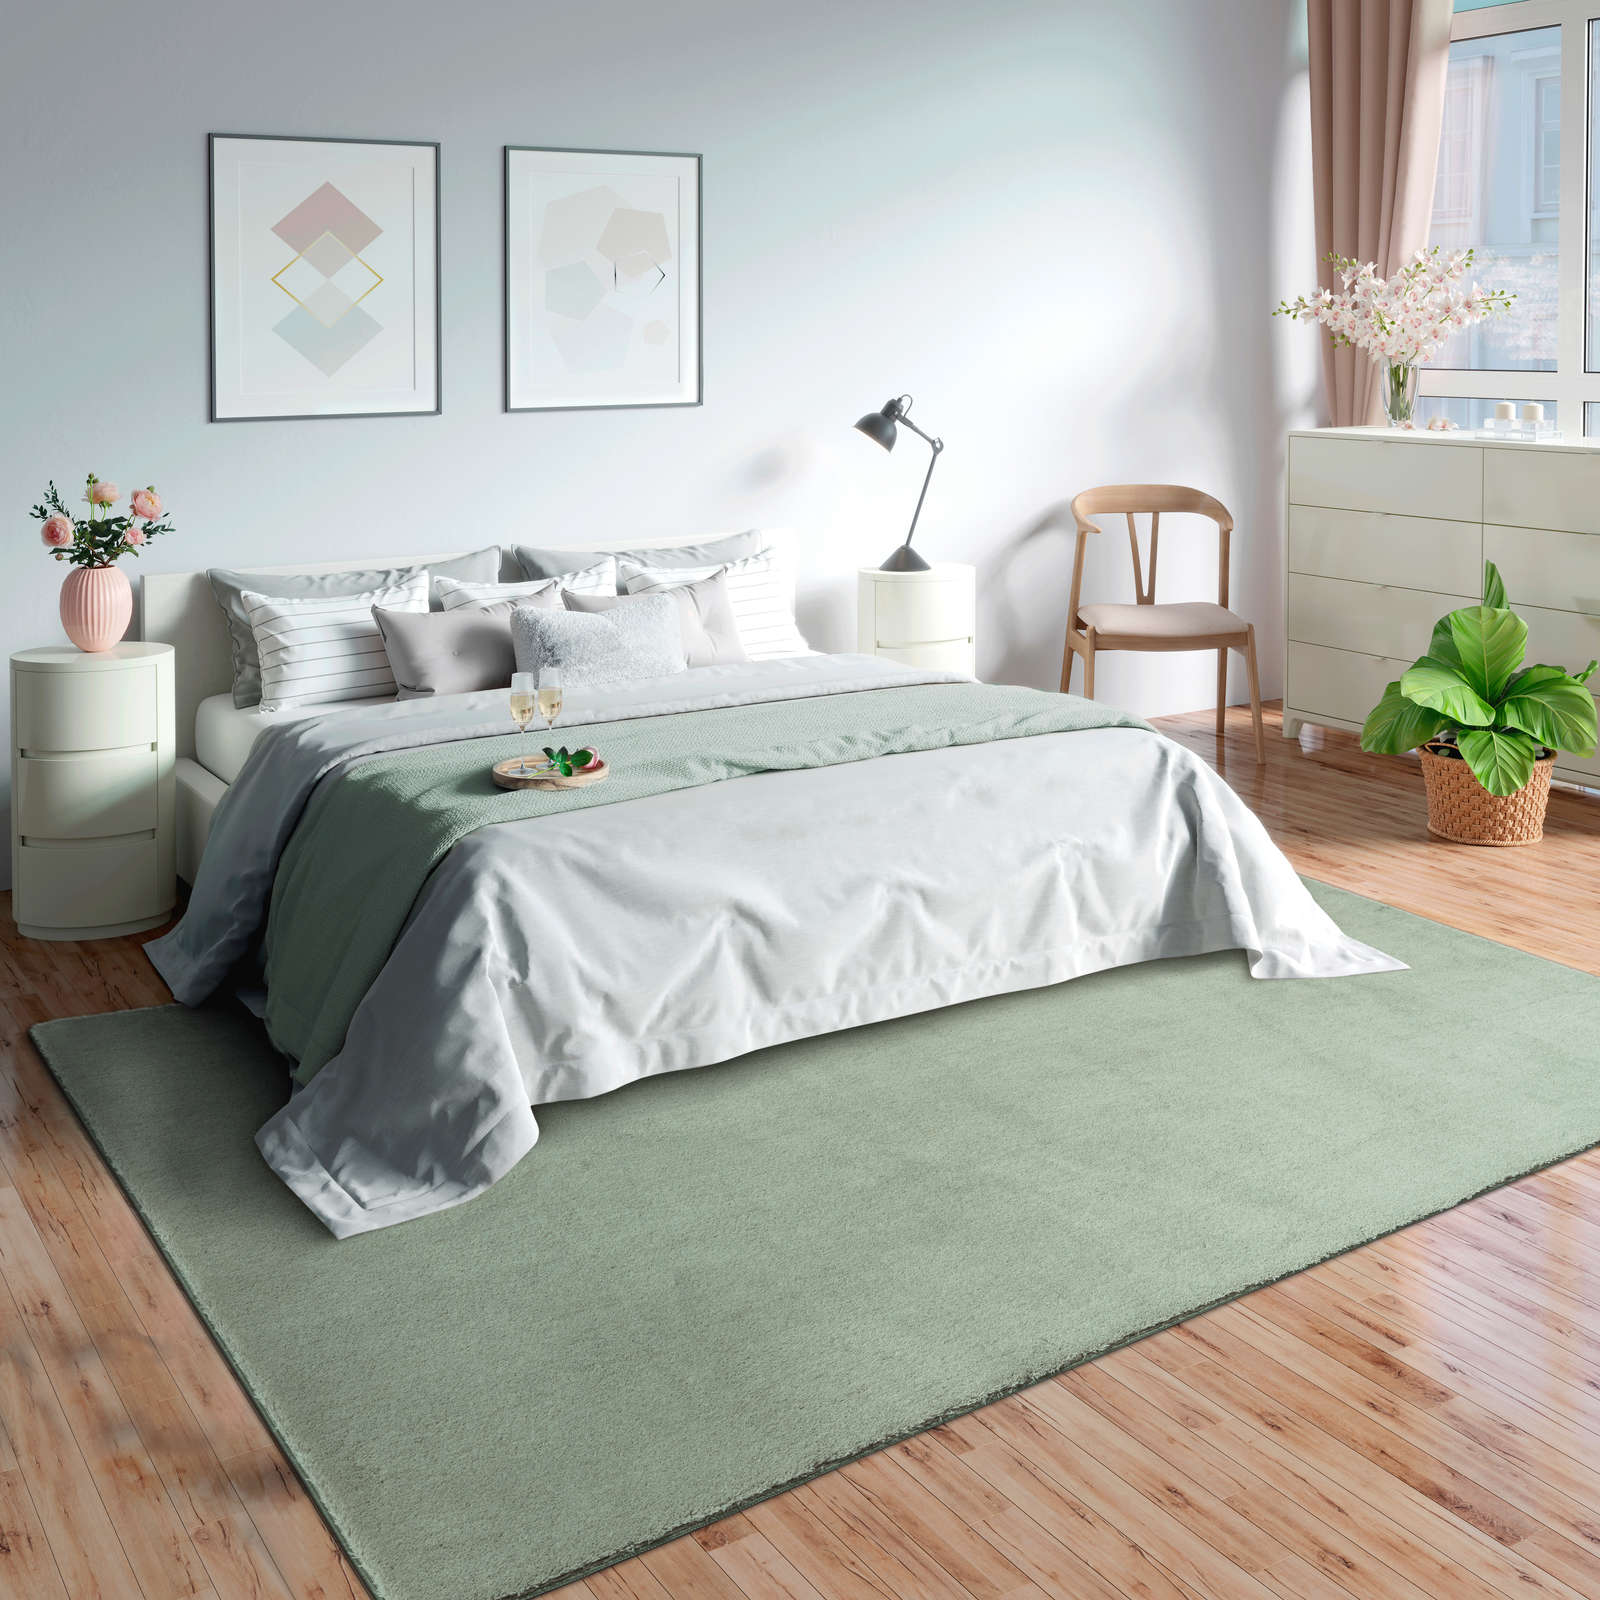             Soft high pile carpet in green - 290 x 200 cm
        